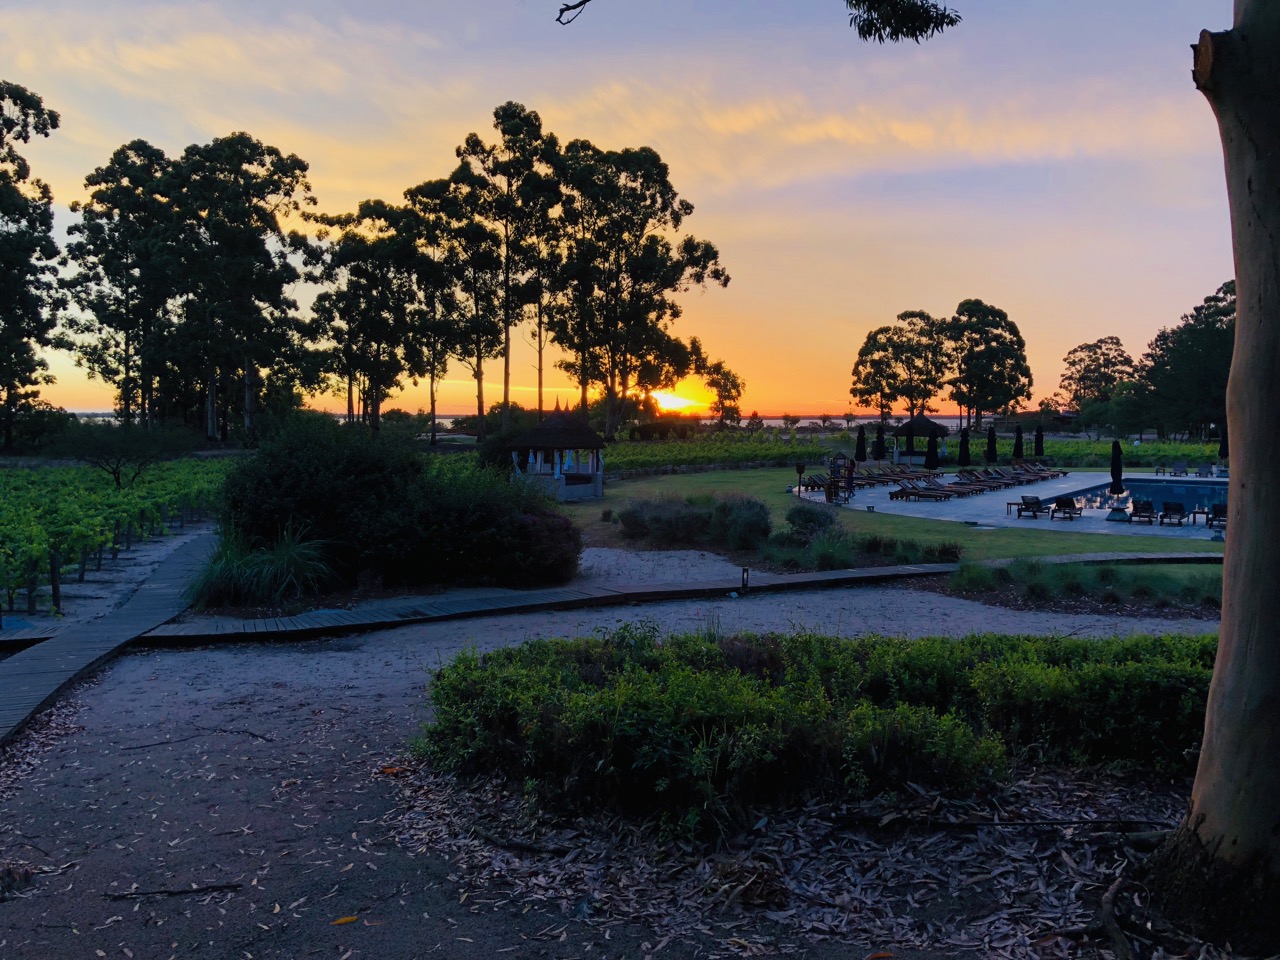 a sunset over a park